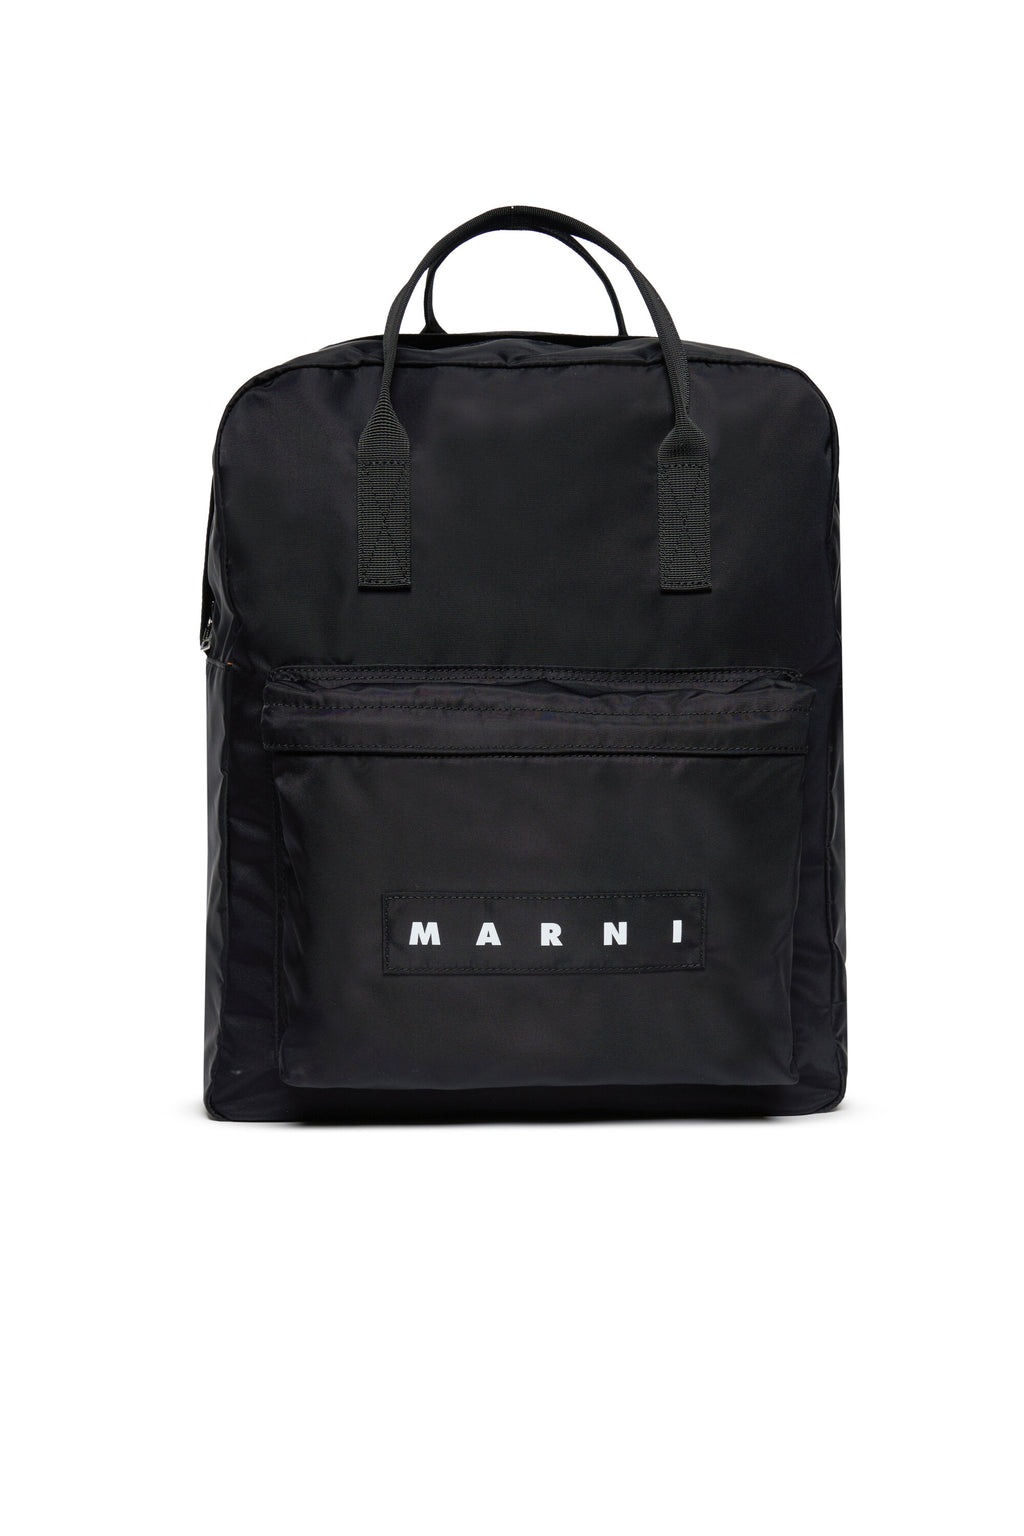 Branded backpack